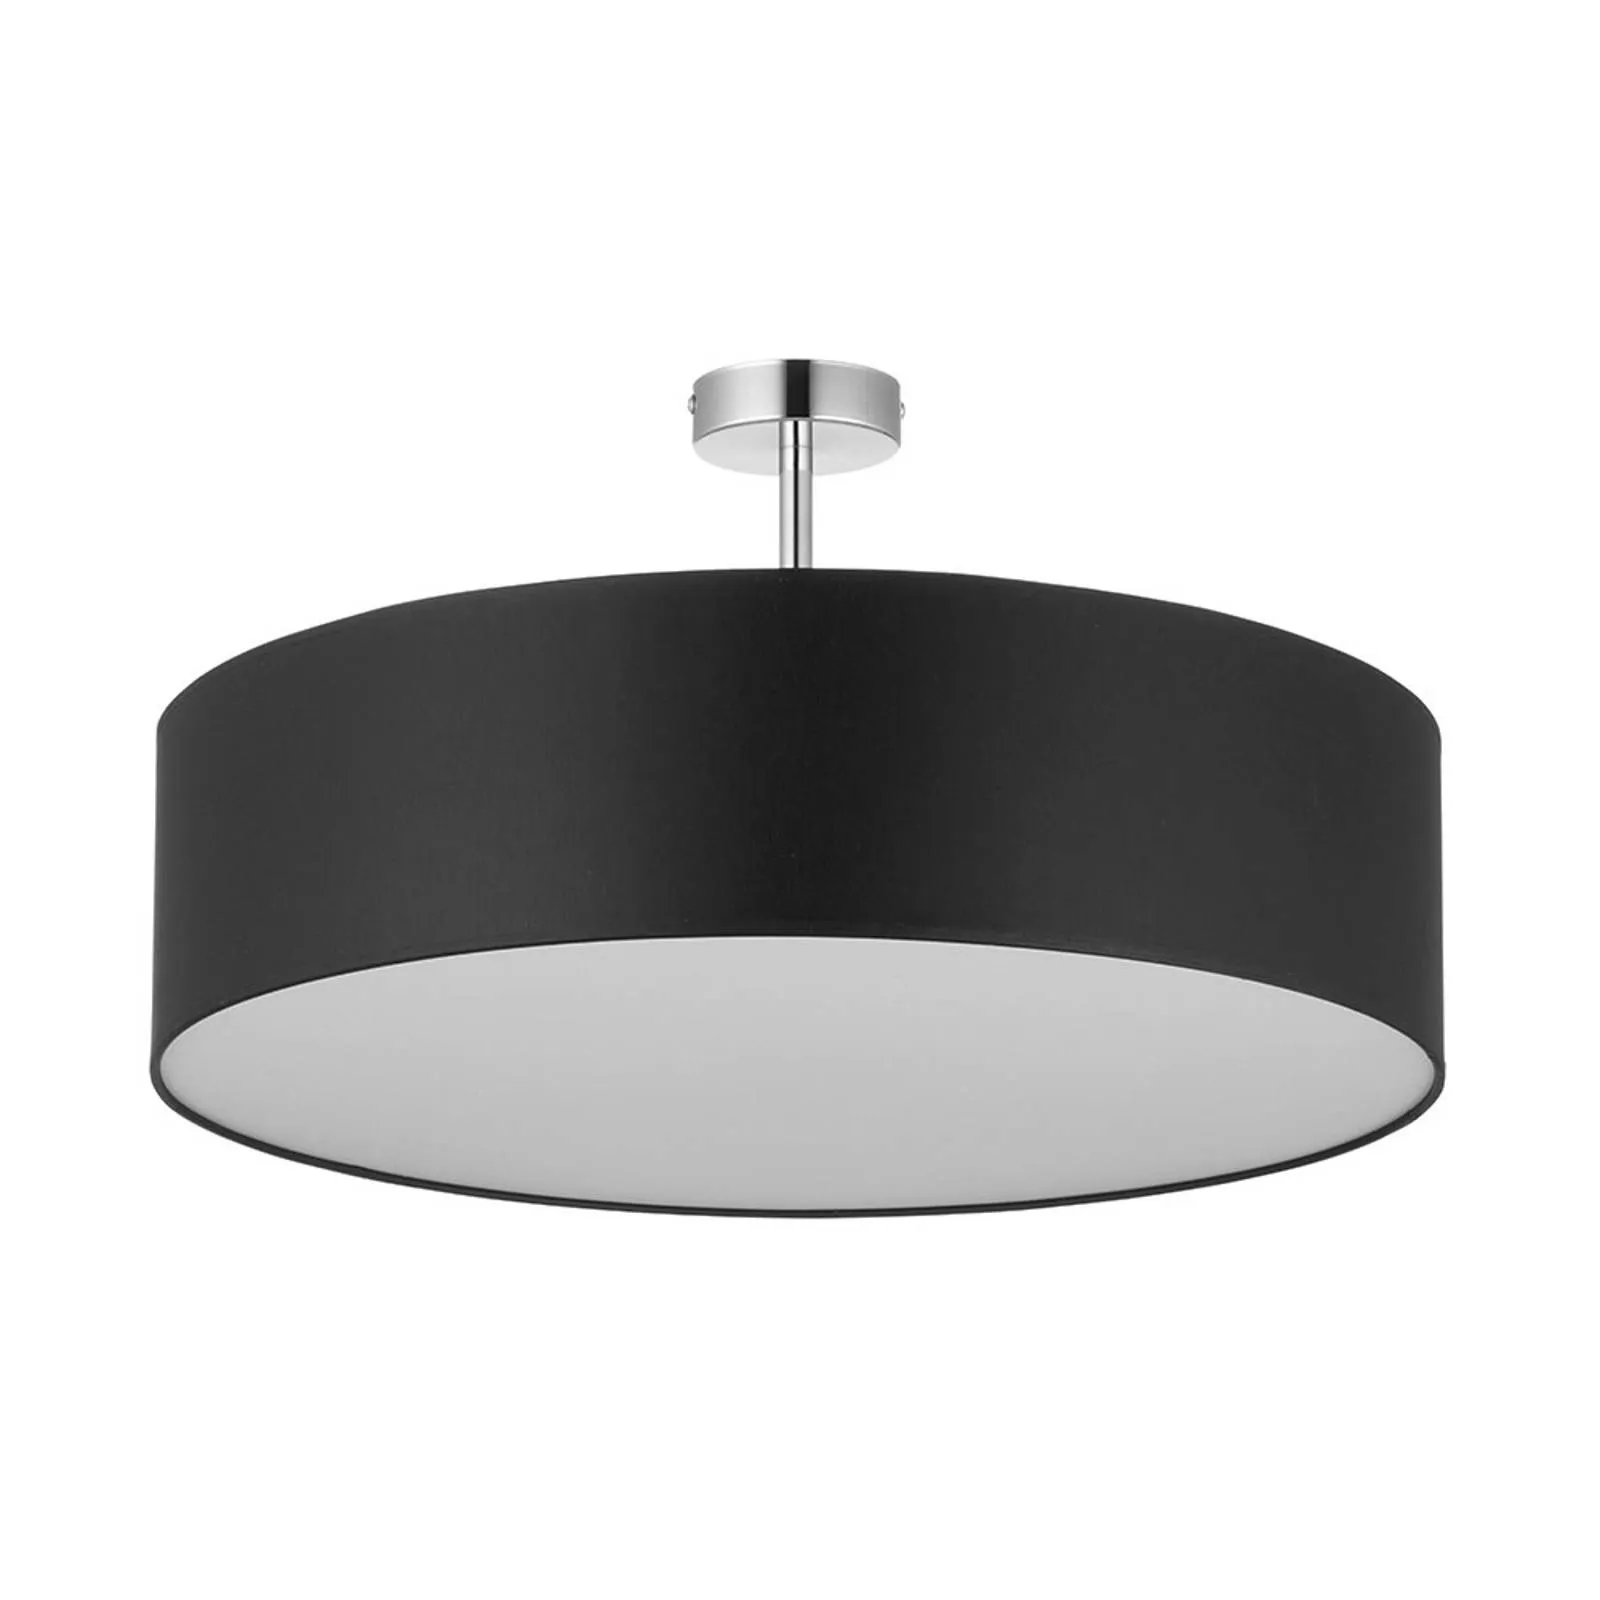 Rondo semi-flush ceiling light, dark grey Ø 60 cm